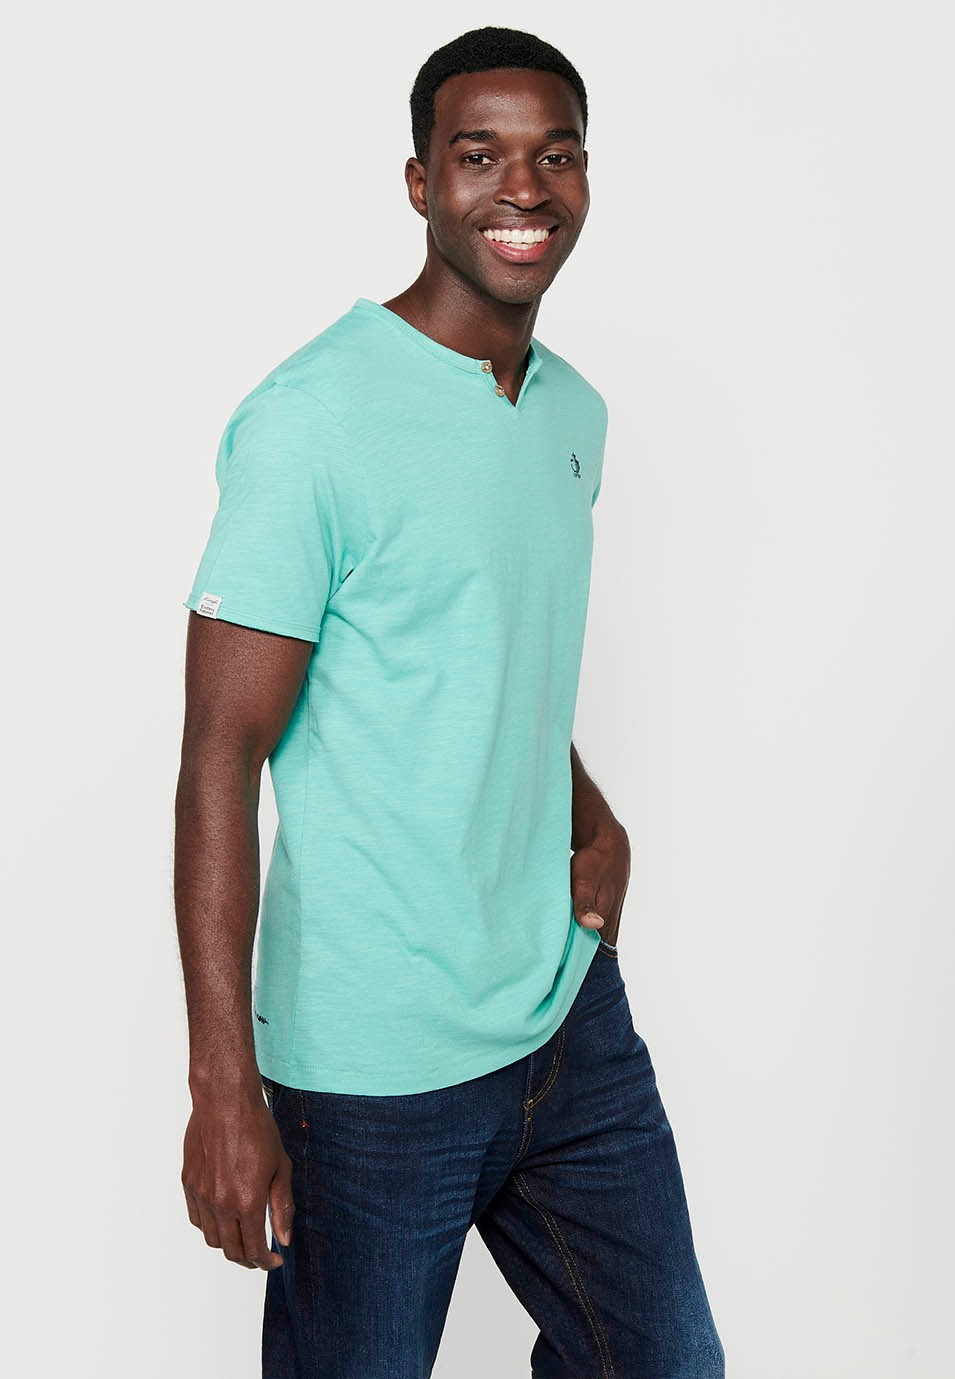 Camiseta básica de manga corta de algodón, cuello V con boton, color menta para hombre 3